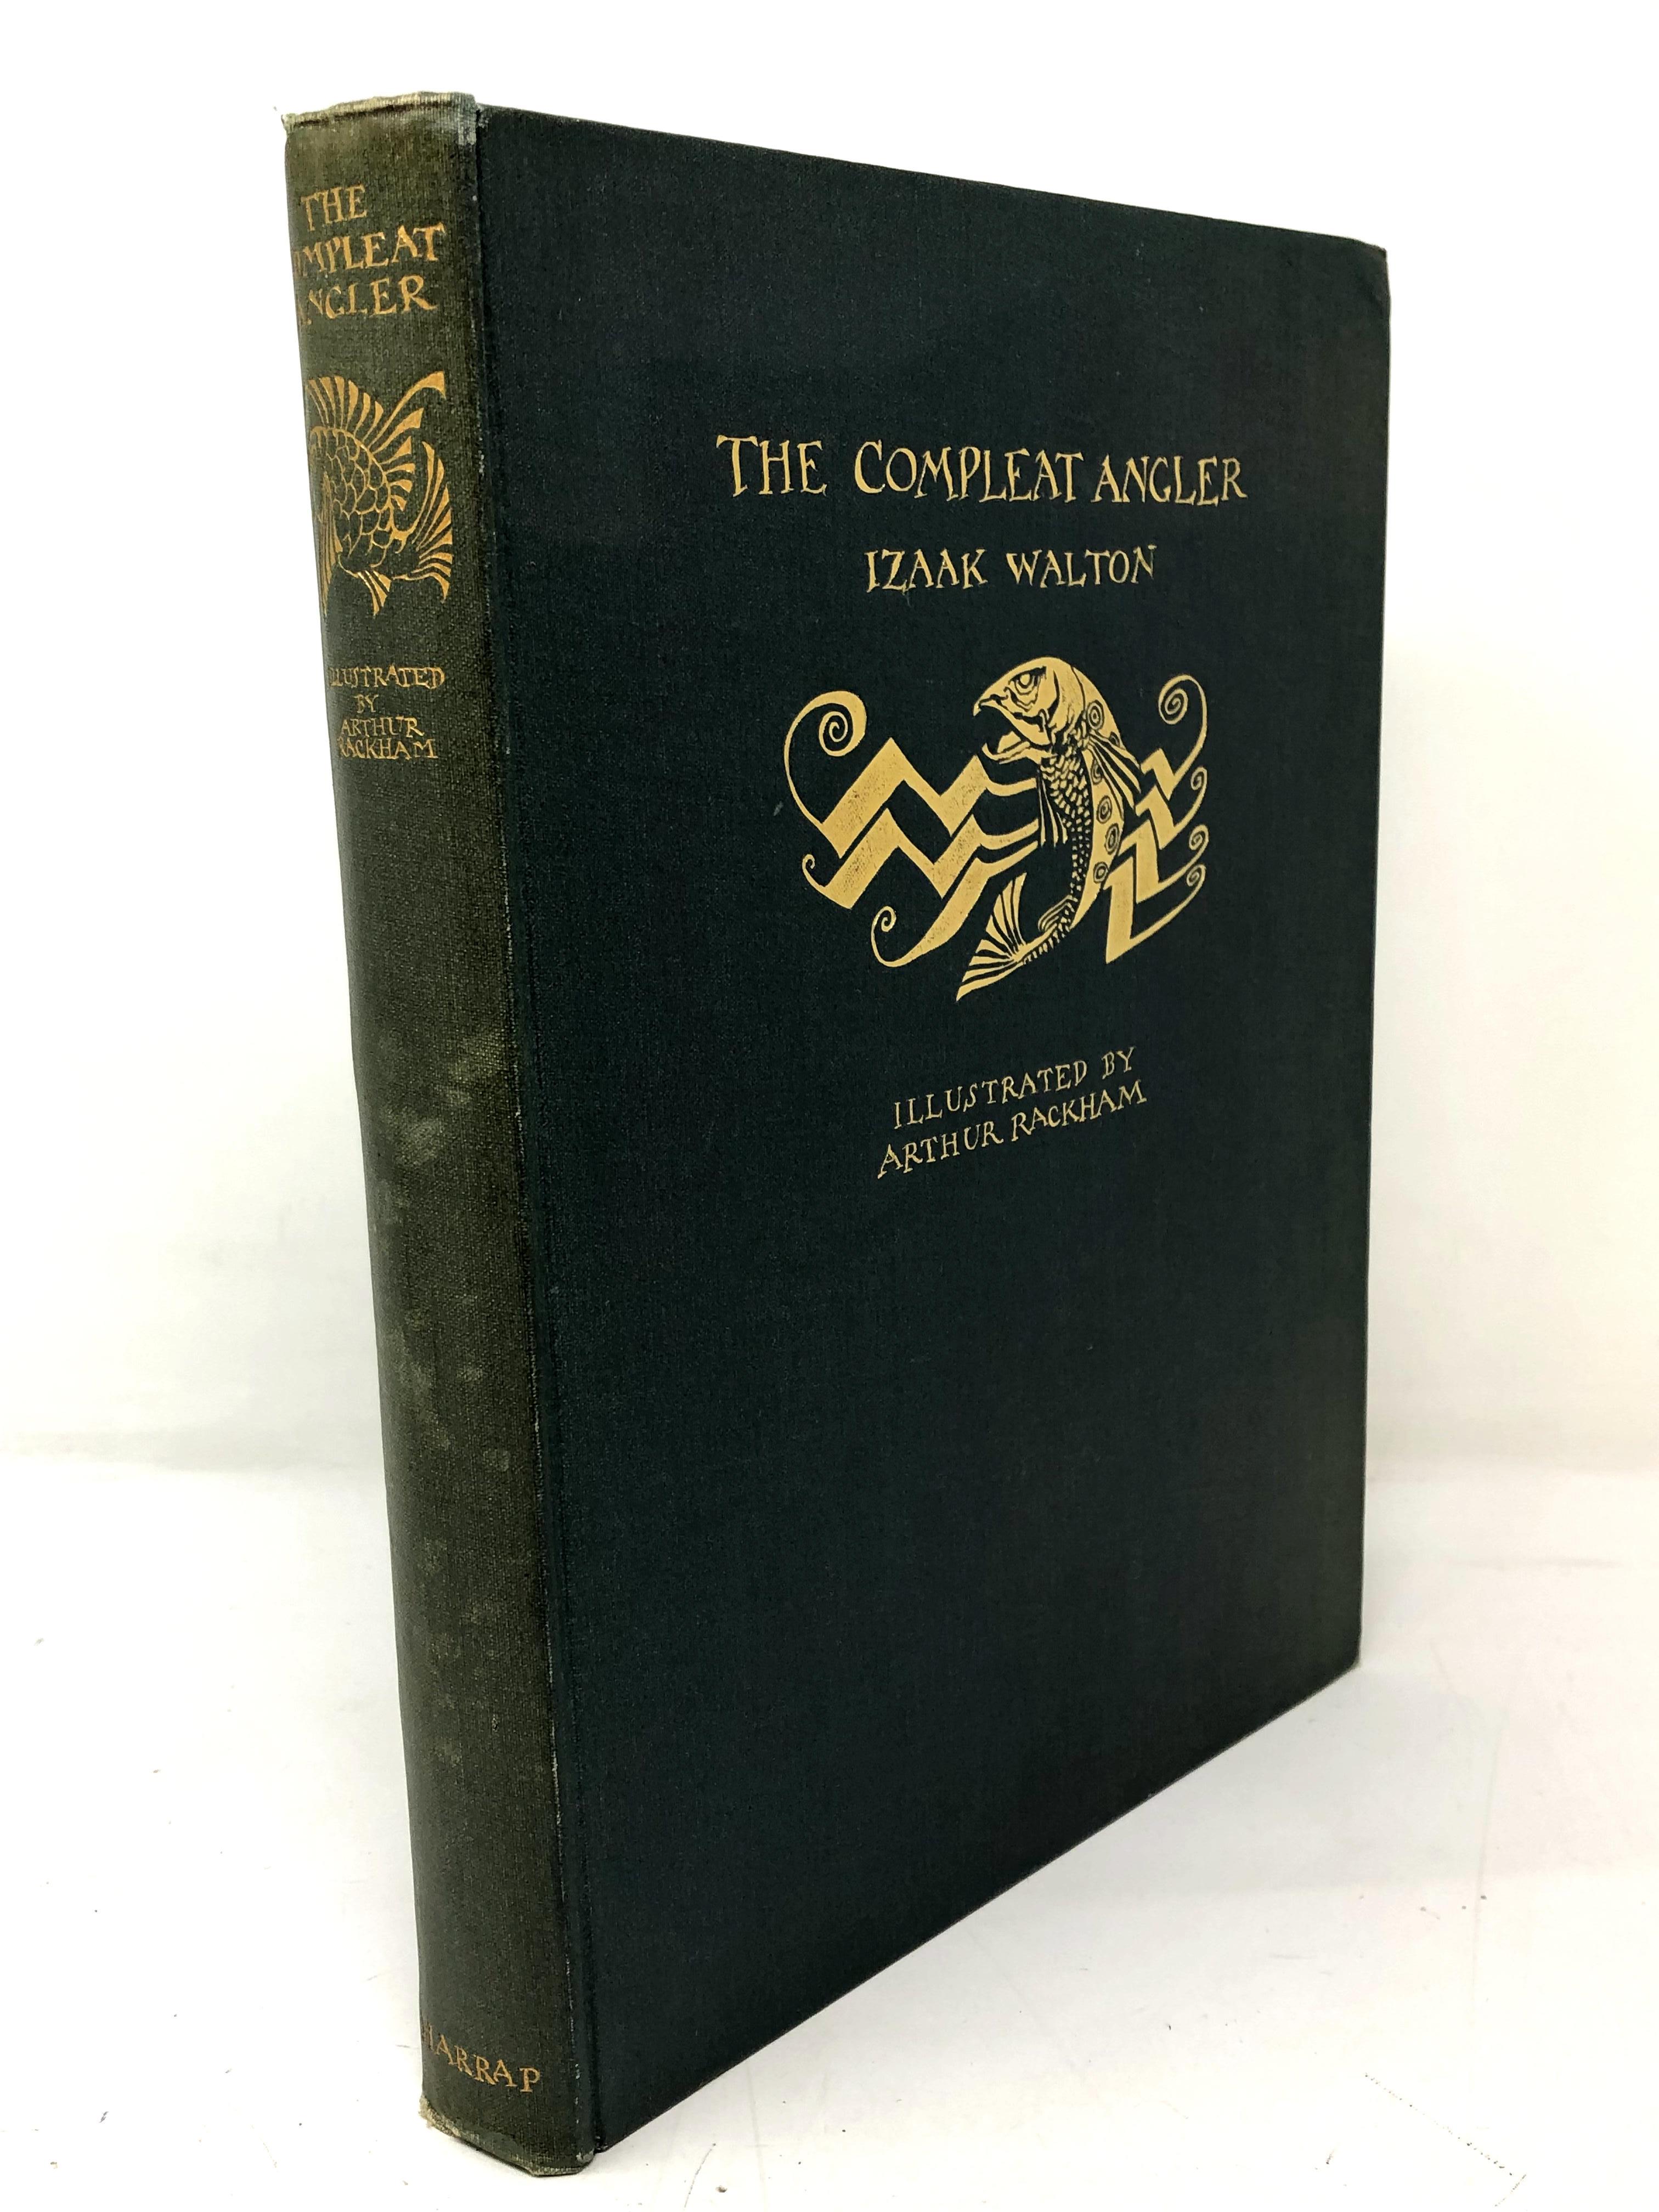 Arthur Rackham, 1867 - 1939 (Illustrator) : The Compleat Angler by Izaak Walton, a volume,